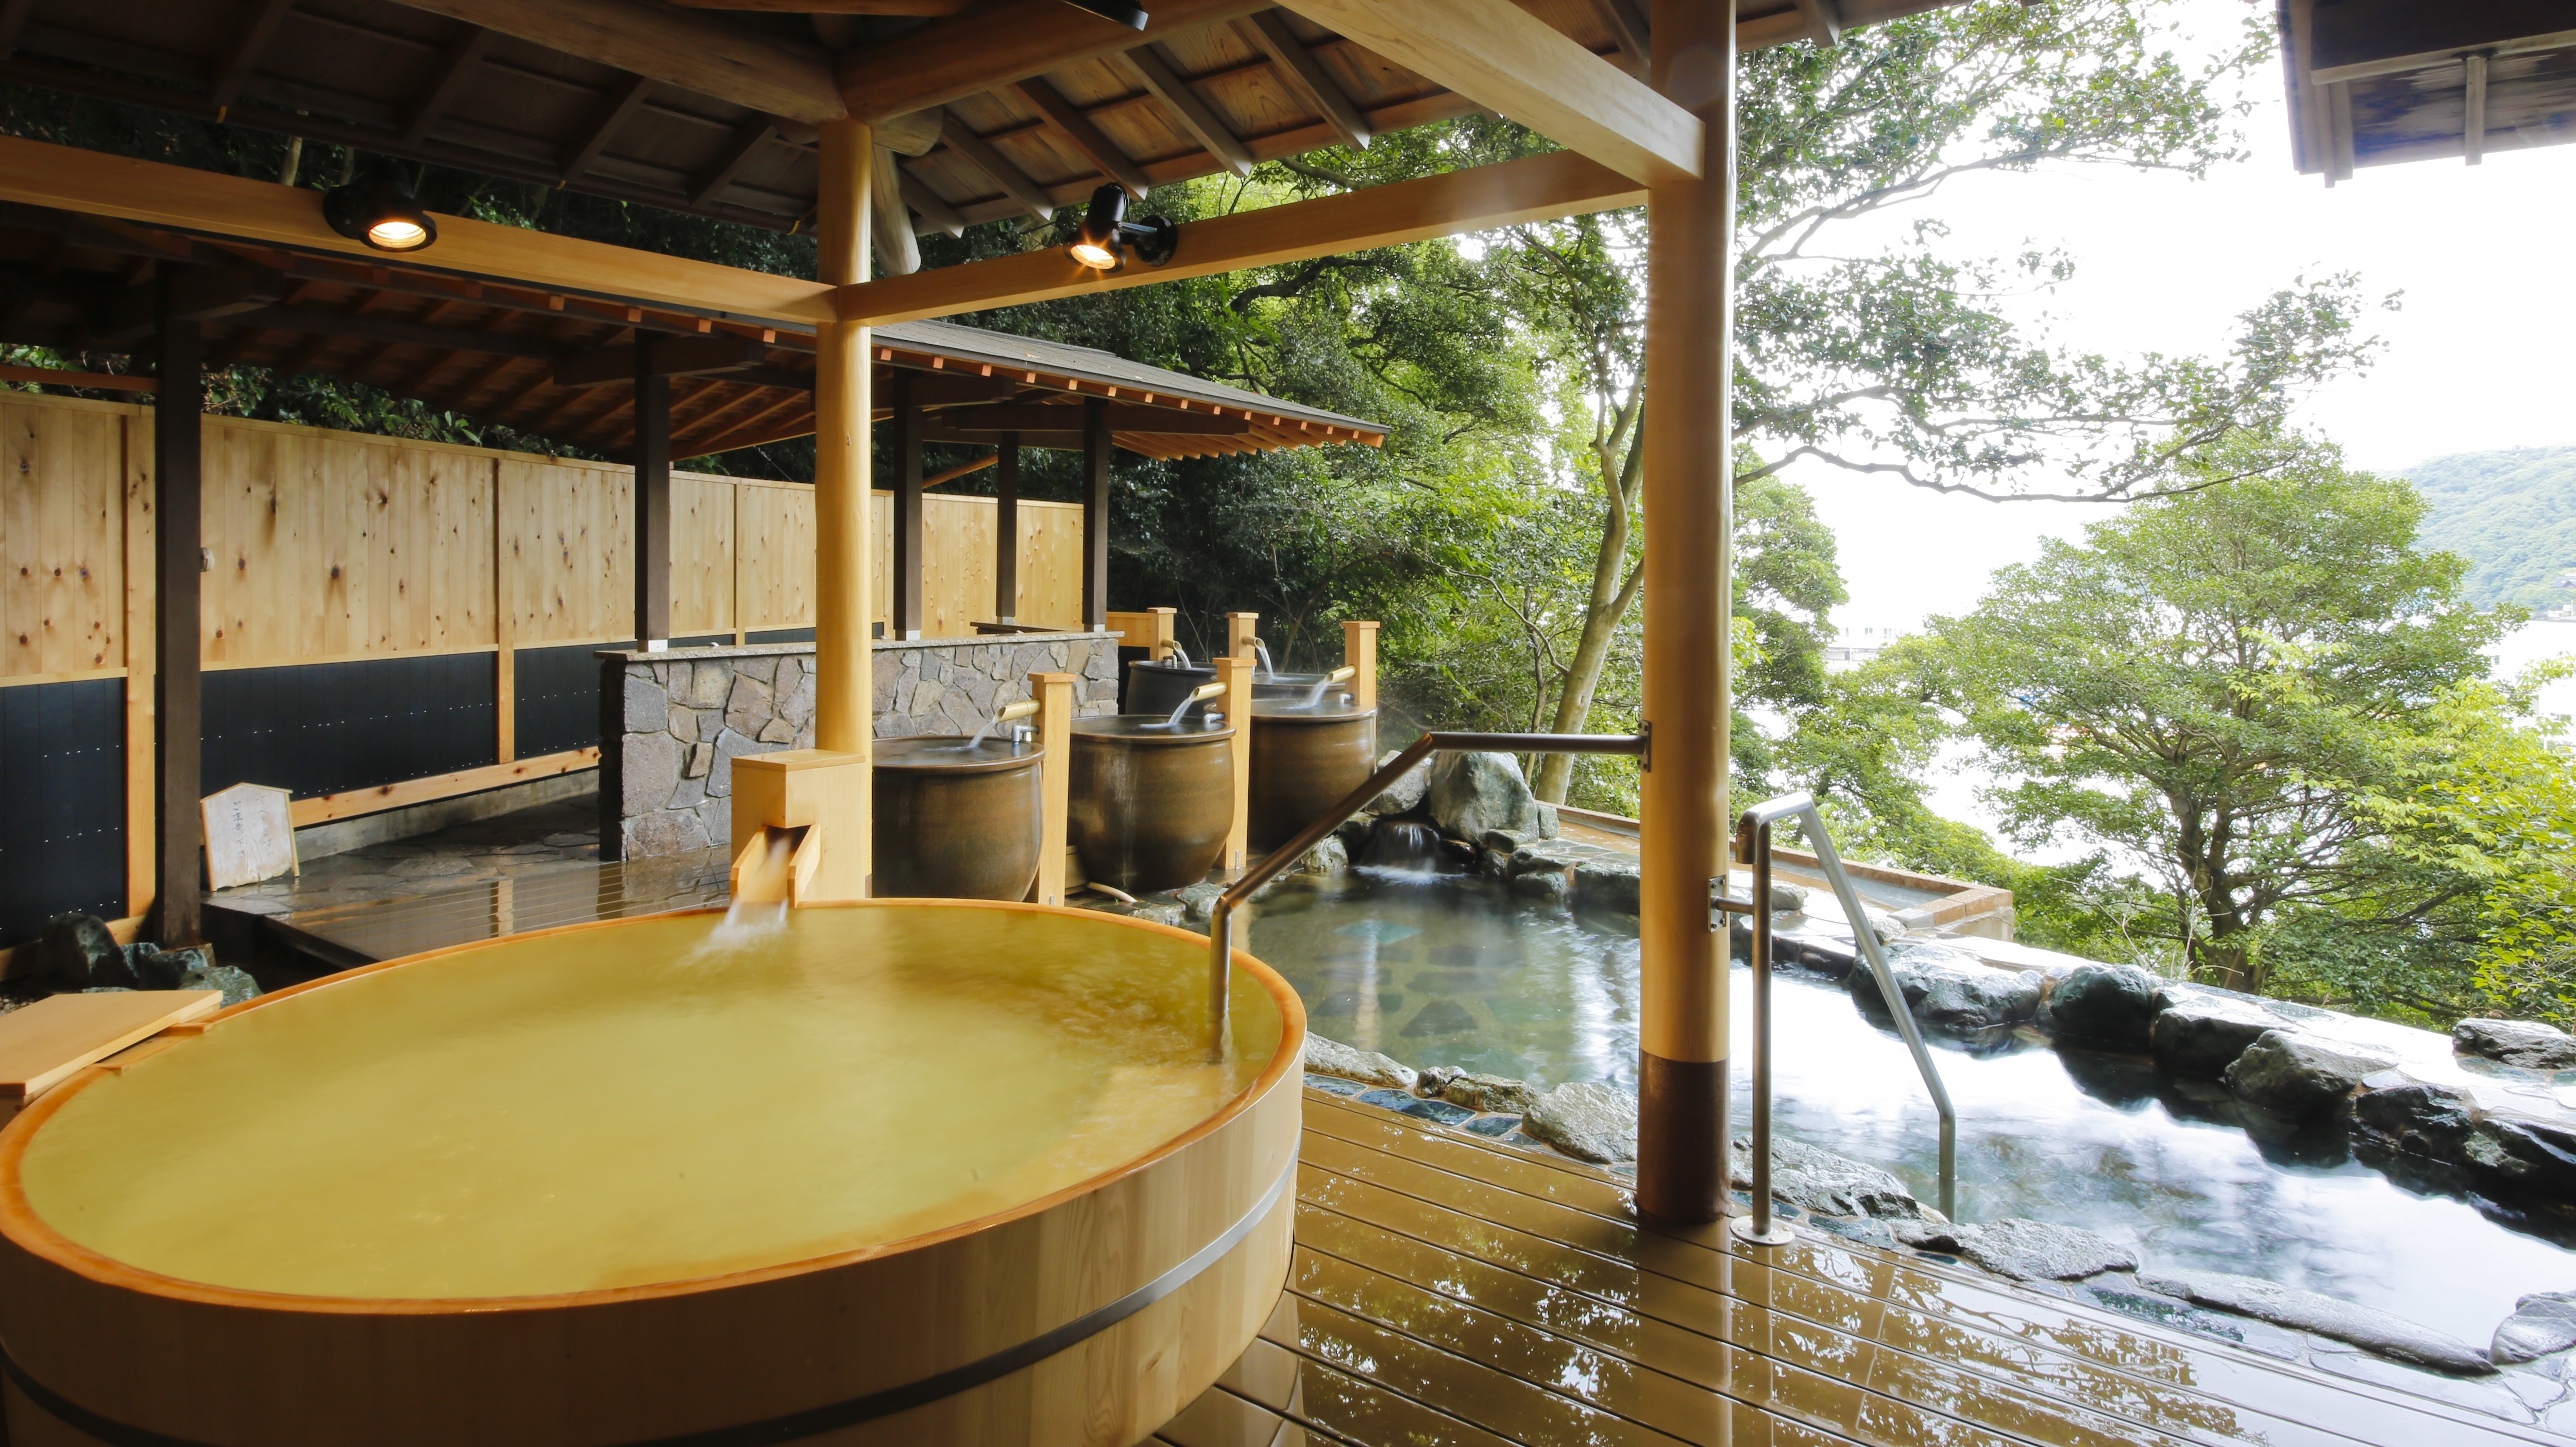 Todaya Onsen Village "Hana no Ka" open-air bath